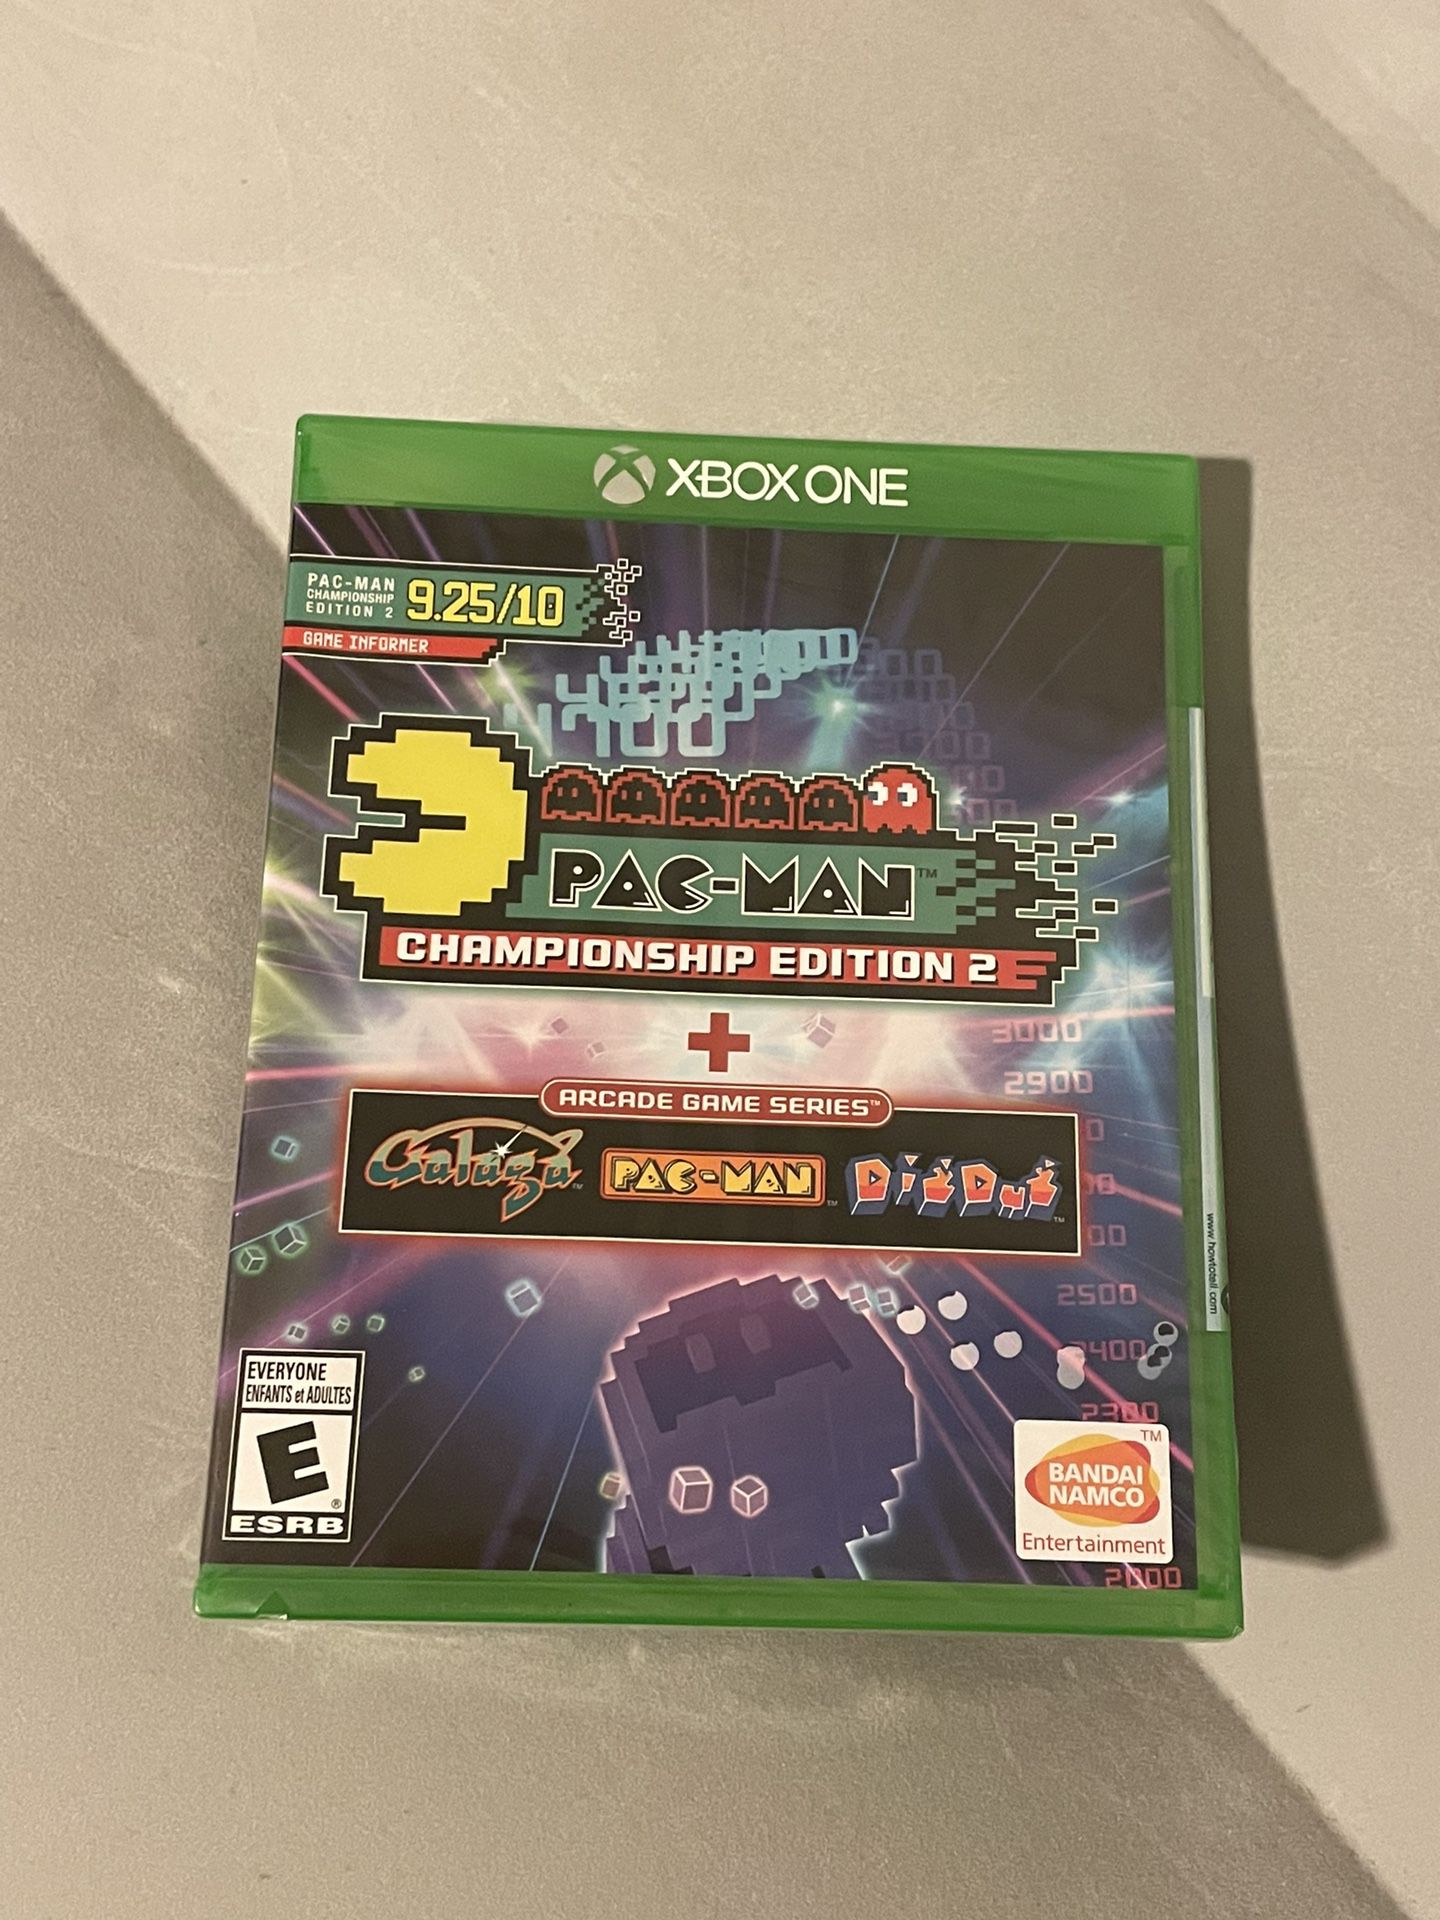 Pac-Man Championship Edition 2 + Arcade Game Series (Microsoft Xbox One, 2016)